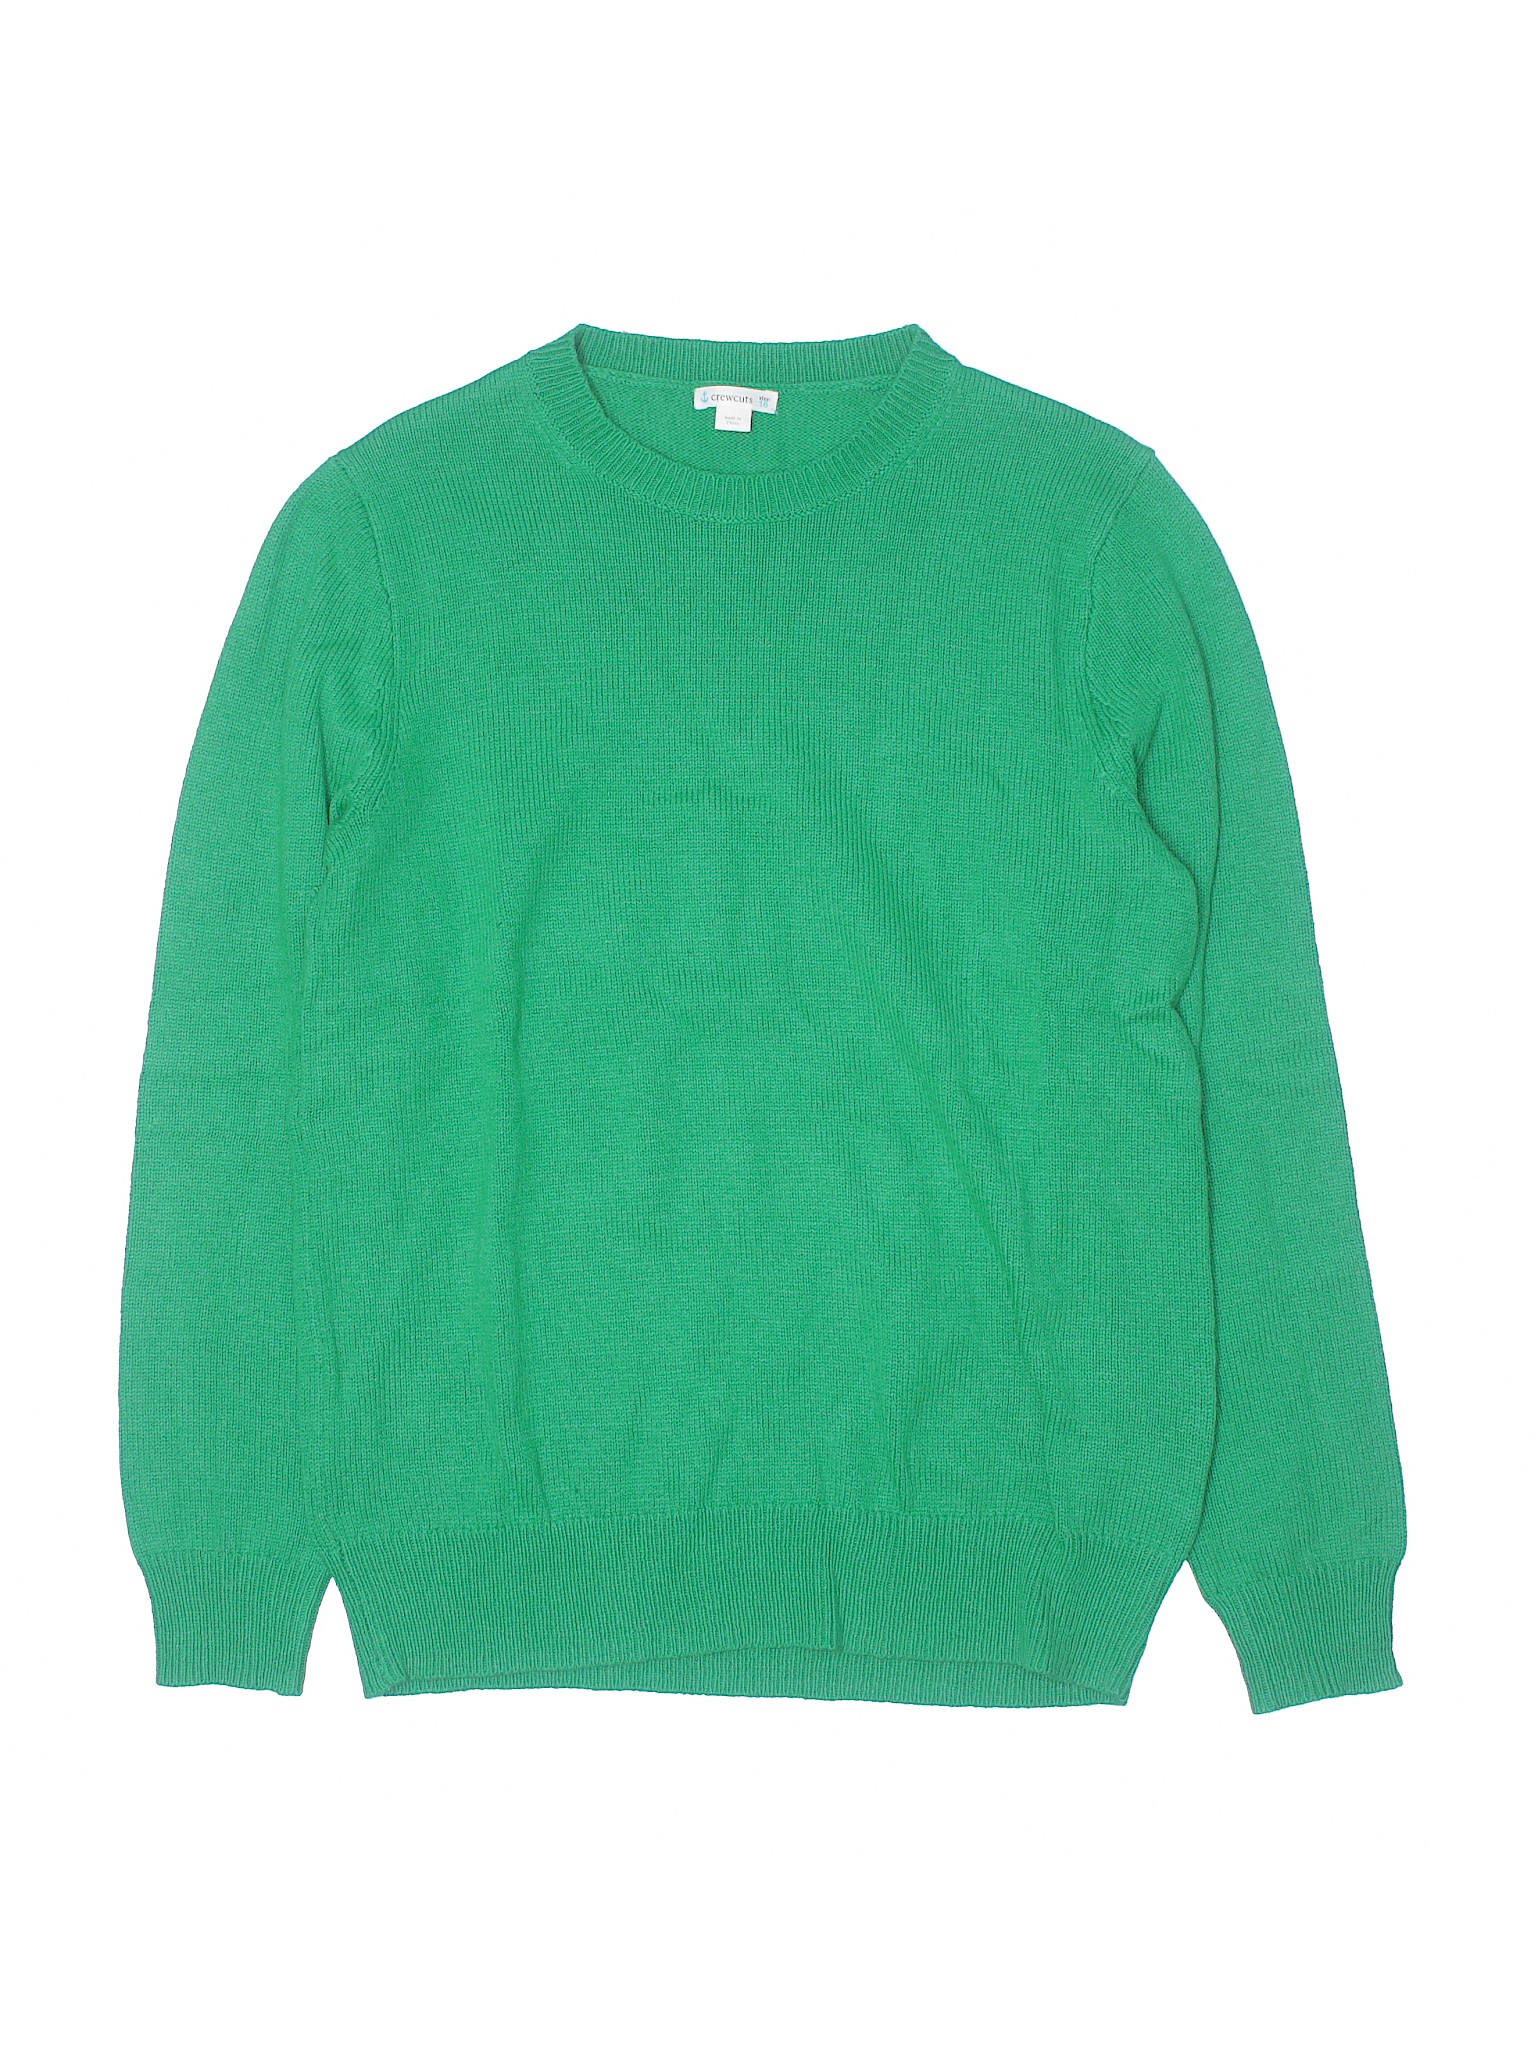 Crewcuts Boys Green Pullover Sweater 16 | eBay